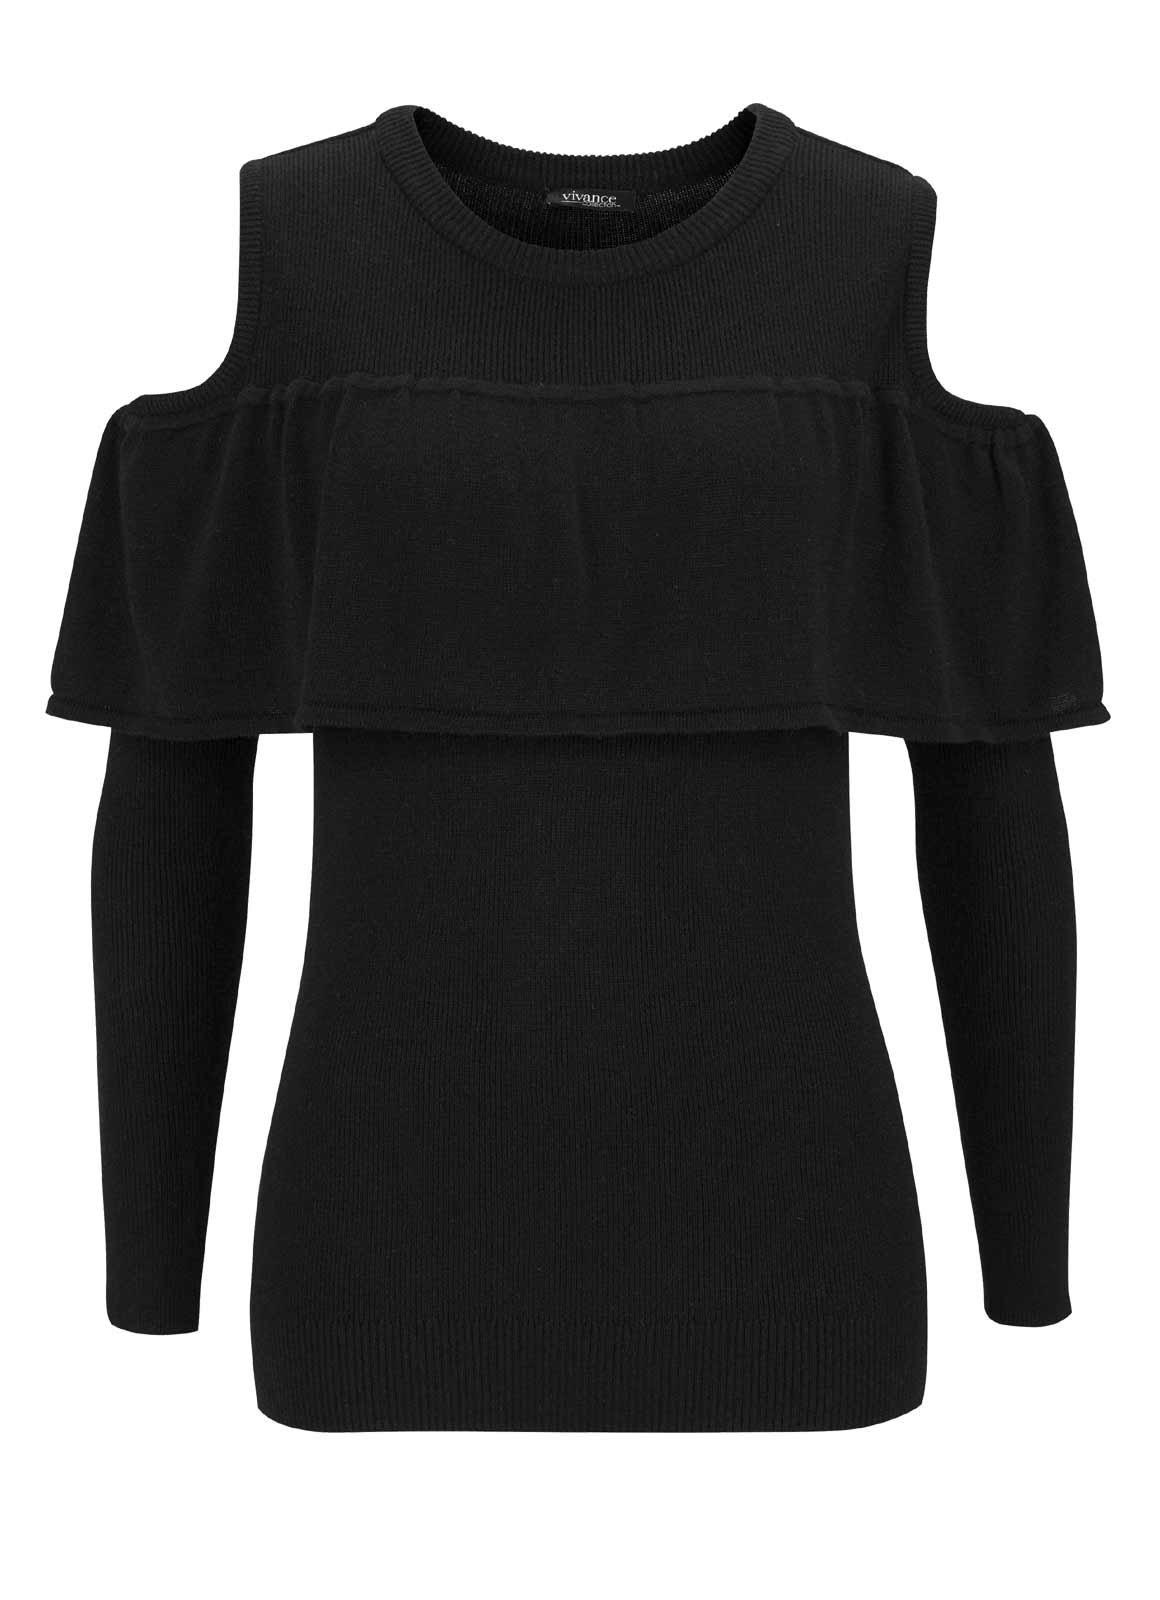 Vivance Collection Damen Volant-Pullover, schwarz